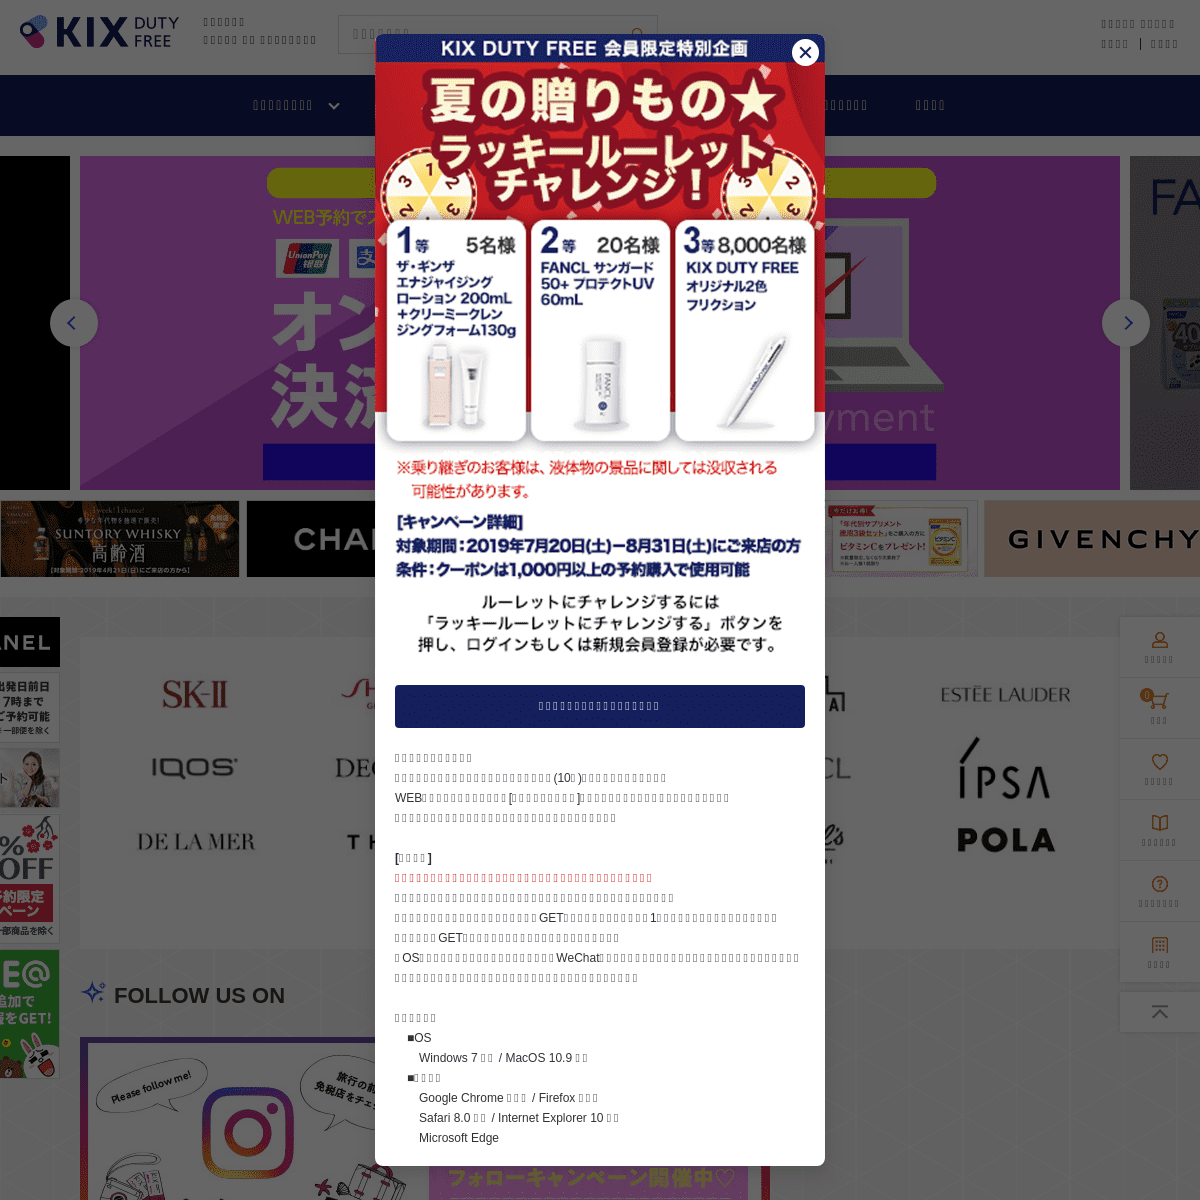 A complete backup of kixdutyfree.jp